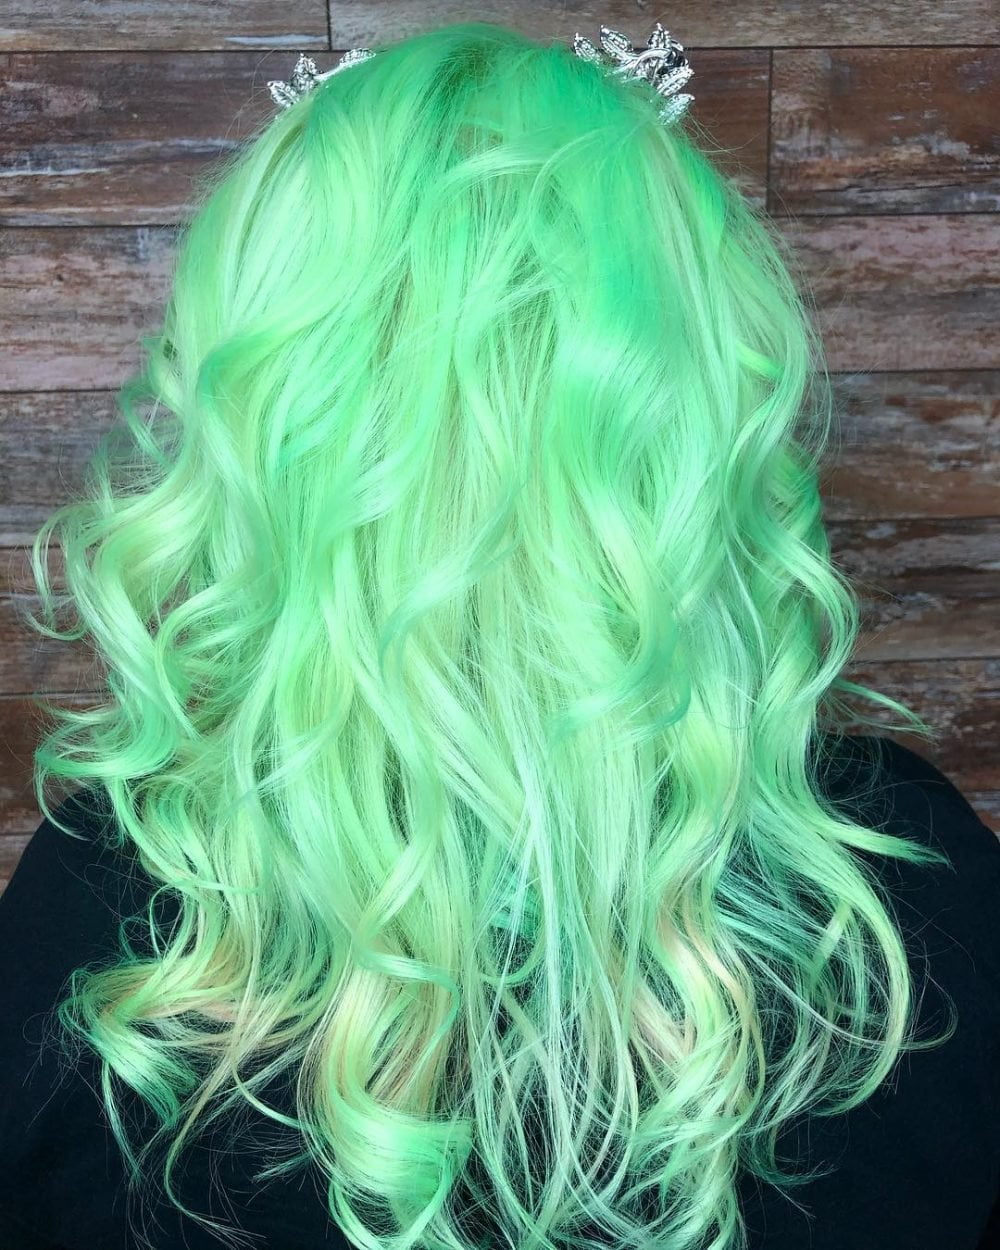 Vibrant green hair